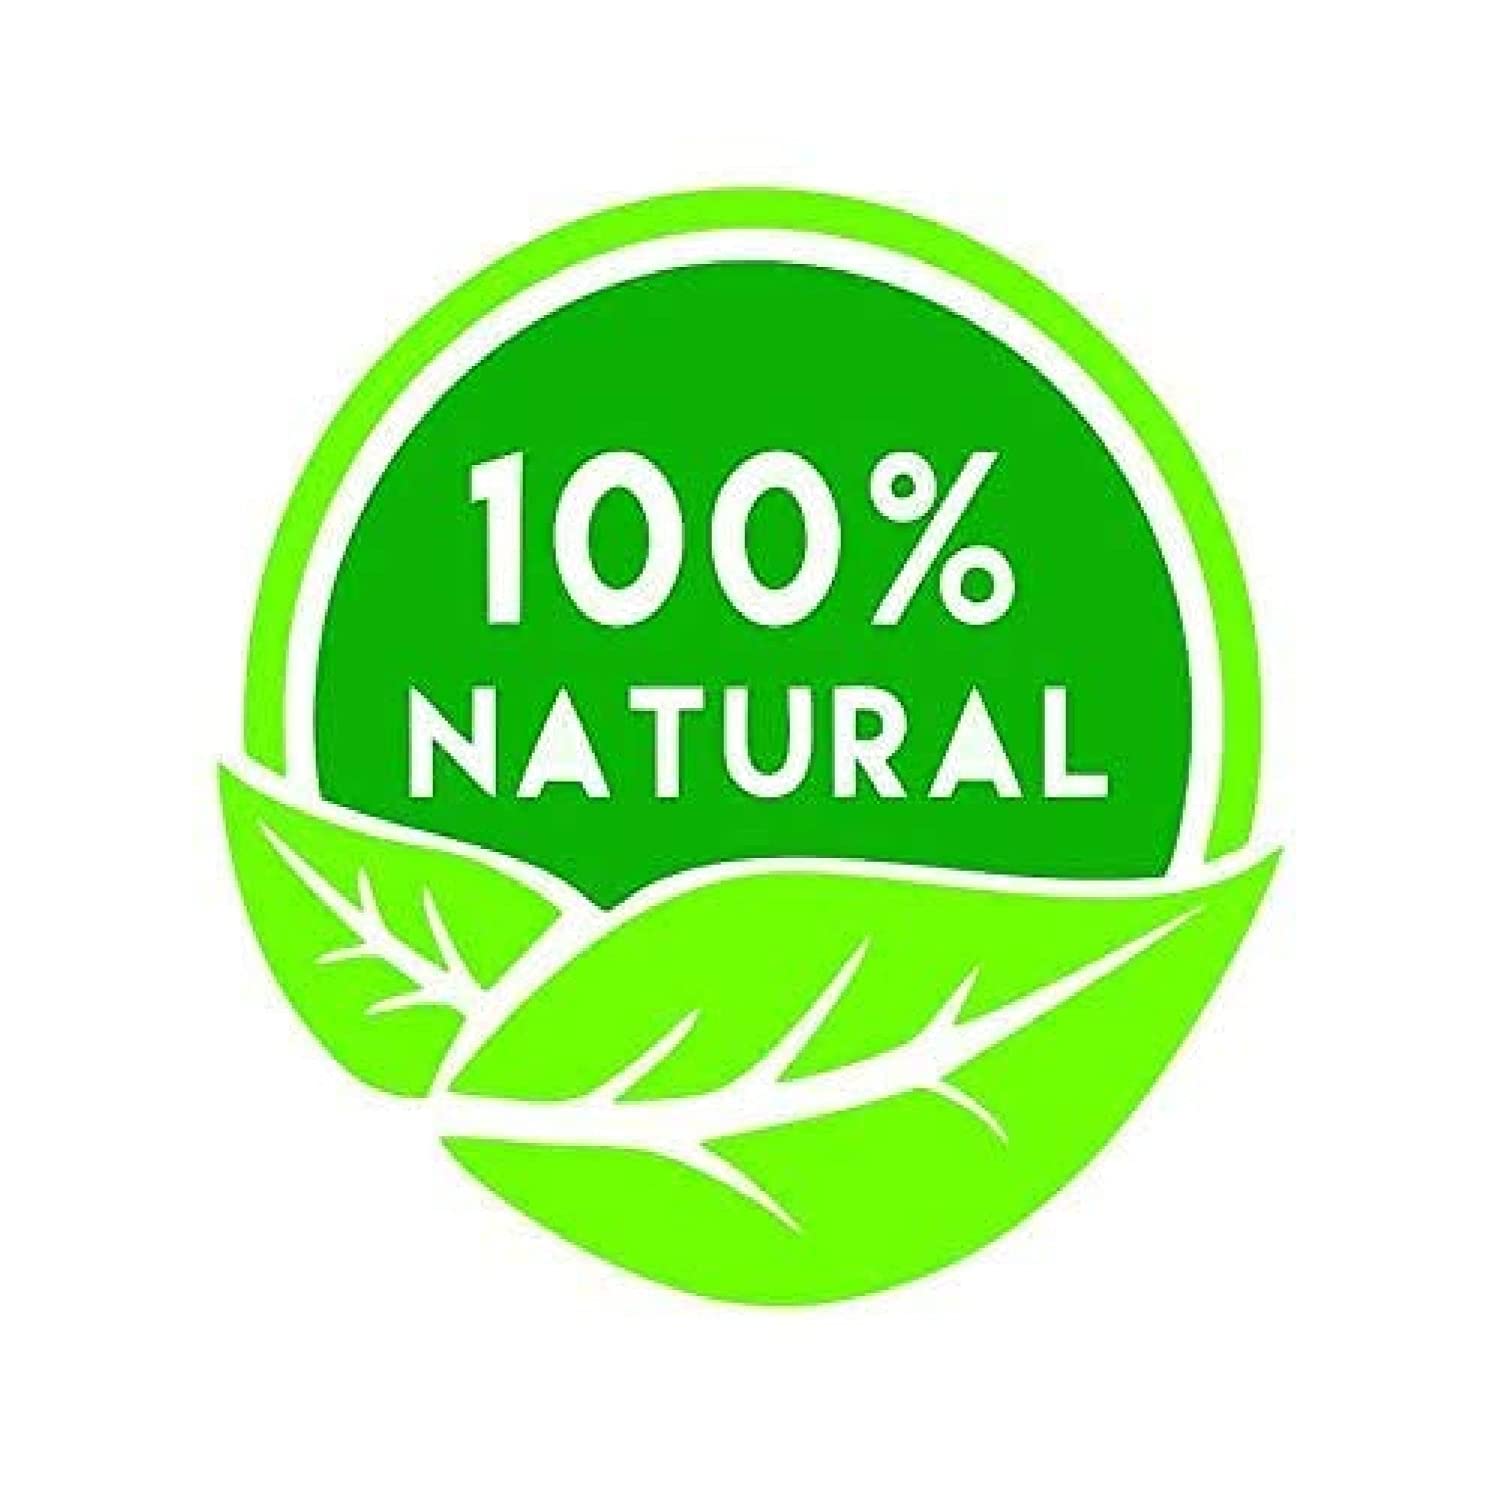 Havintha Natural Face Blooming Pack with Kalonji, Masoor Dal, Mulethi &amp; Multani Mitti for Nourishing and Glowing Skin - 3.5 oz | 0.2 lb | 100 gm